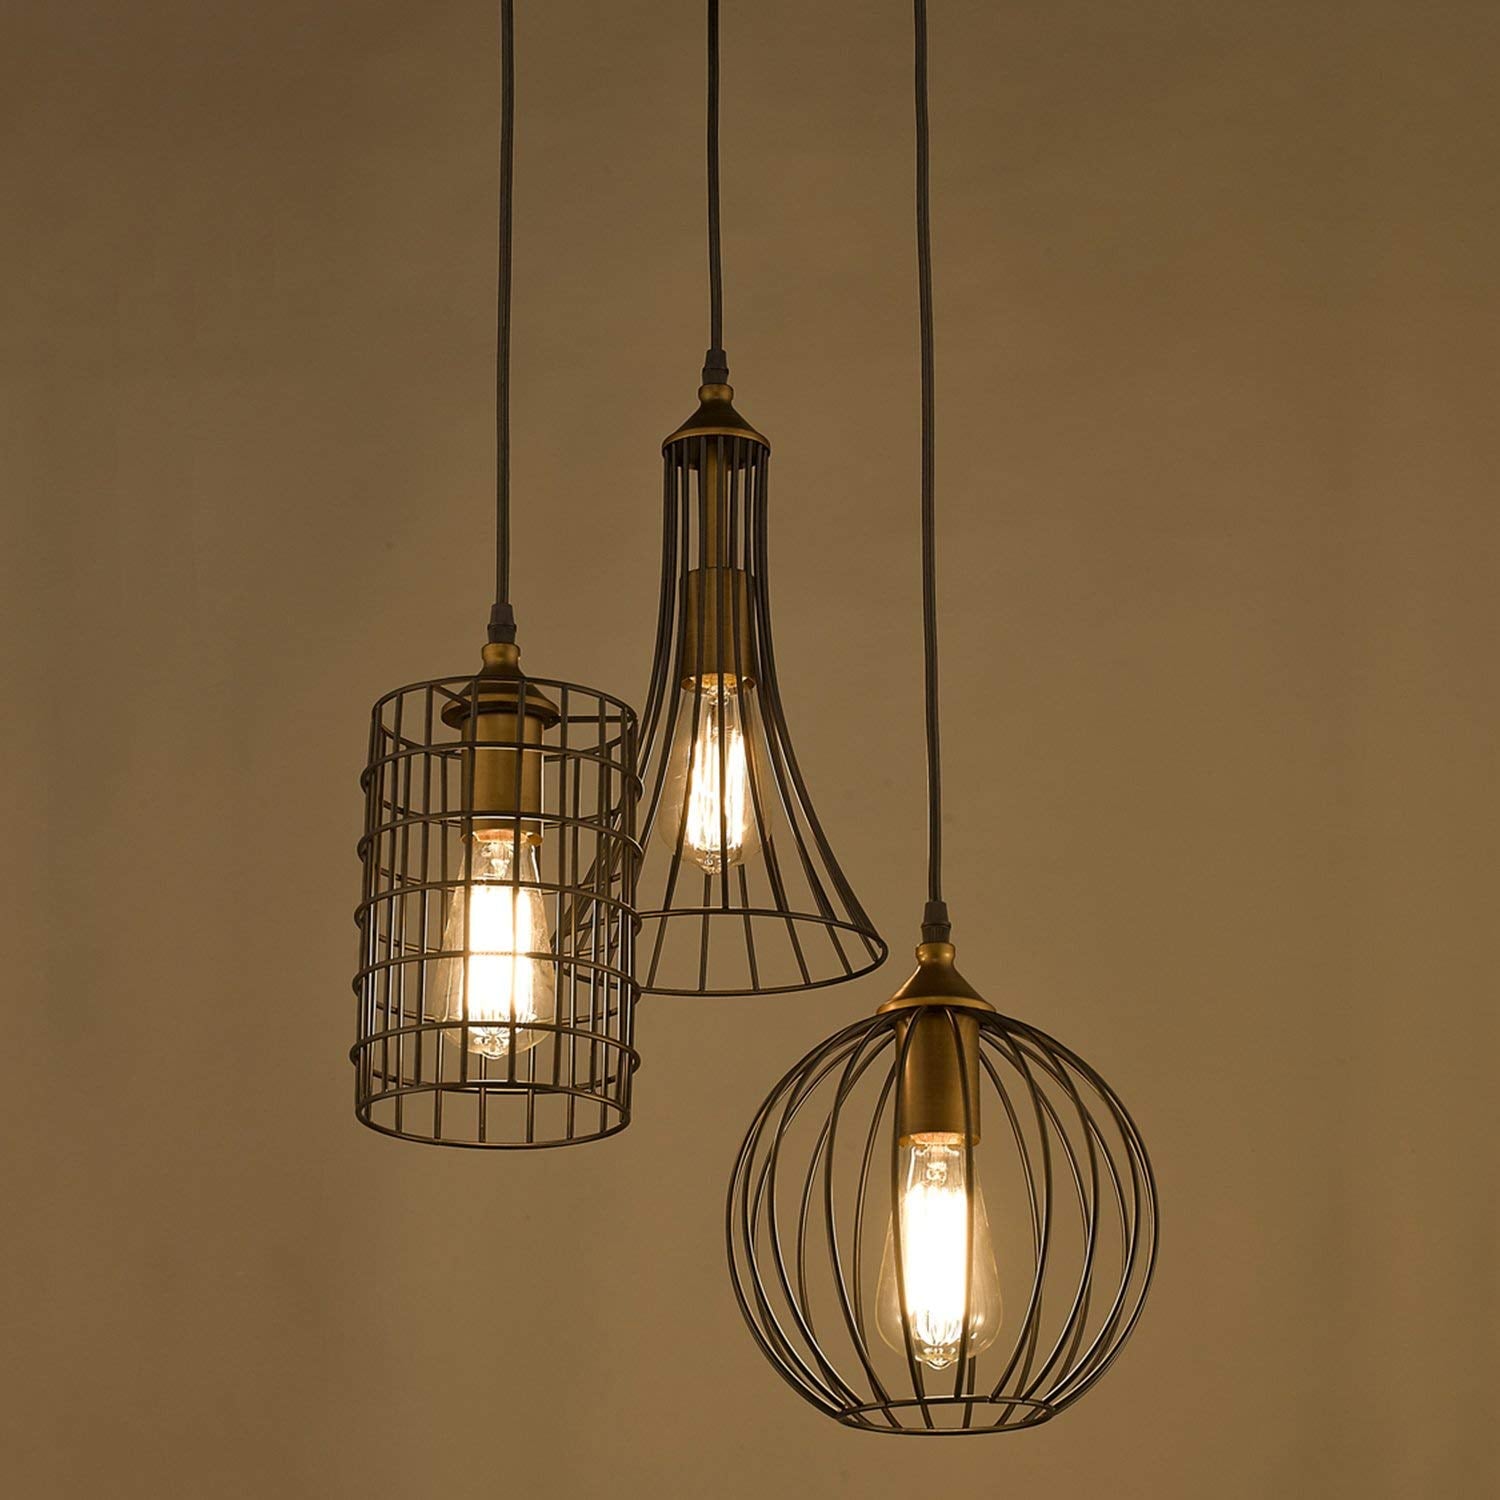 Sottae Industrial Vintage Hanging Lamp Basket Farmhouse Pendant Light,Single Kitchen Metal Geometric Cage Pendant Light Fixture with Black Frame 